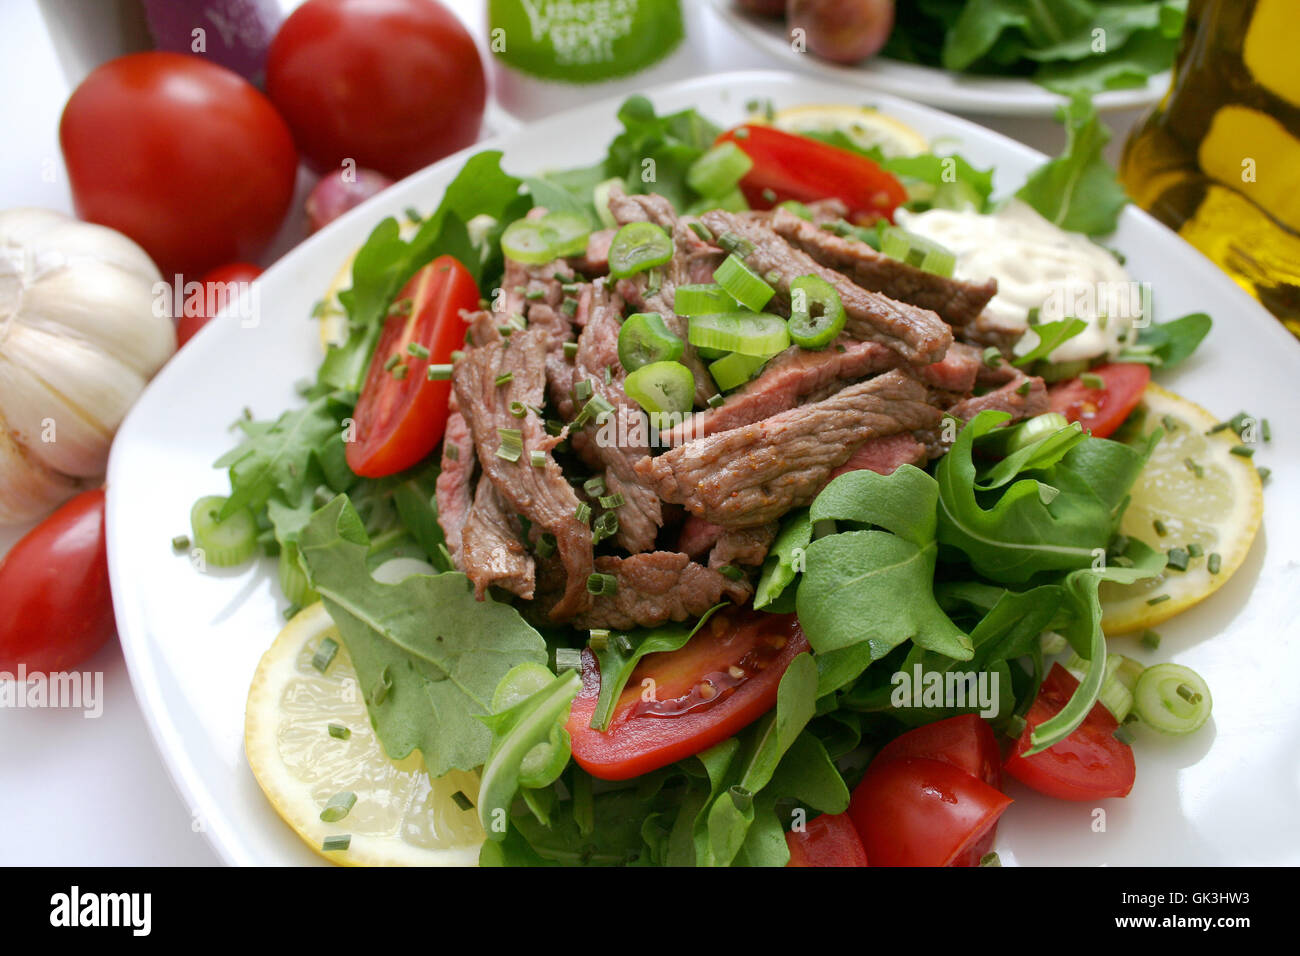 salad Stock Photo